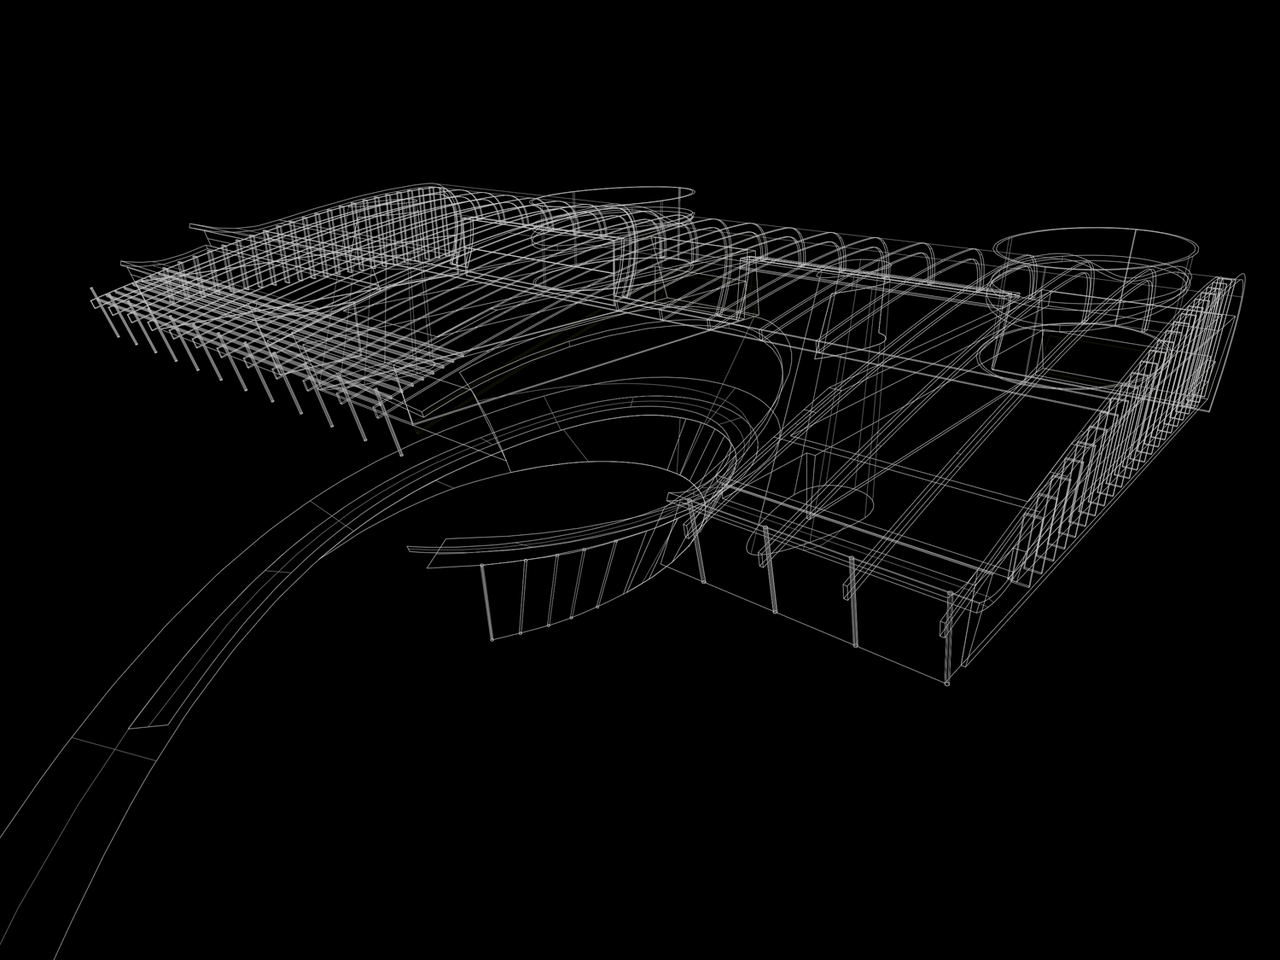 Aeronautics facility design meets nurbs modeling. Flow.